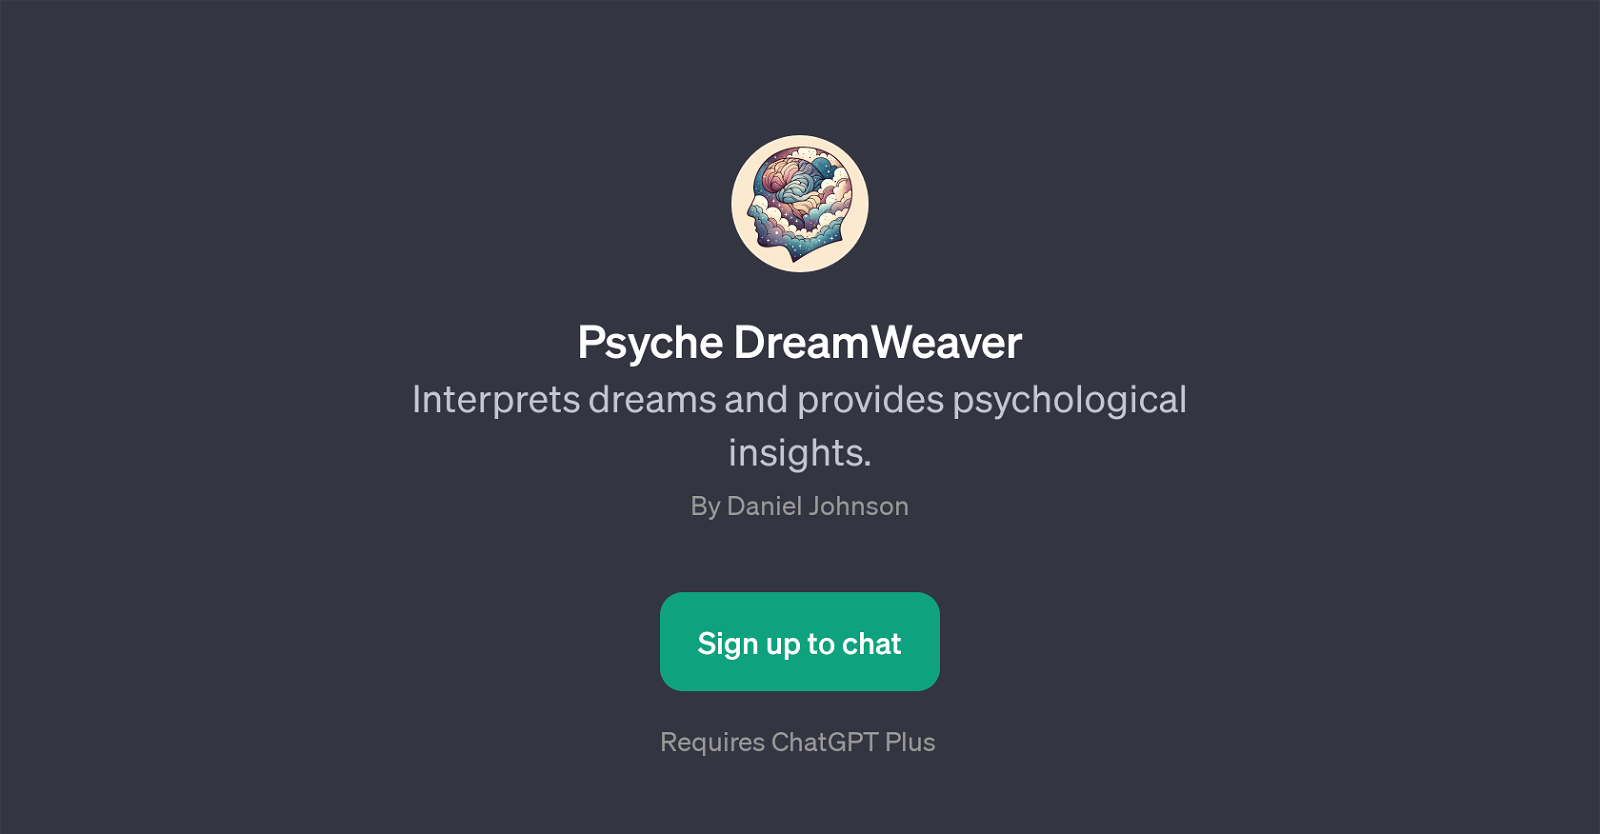 Psyche DreamWeaver website